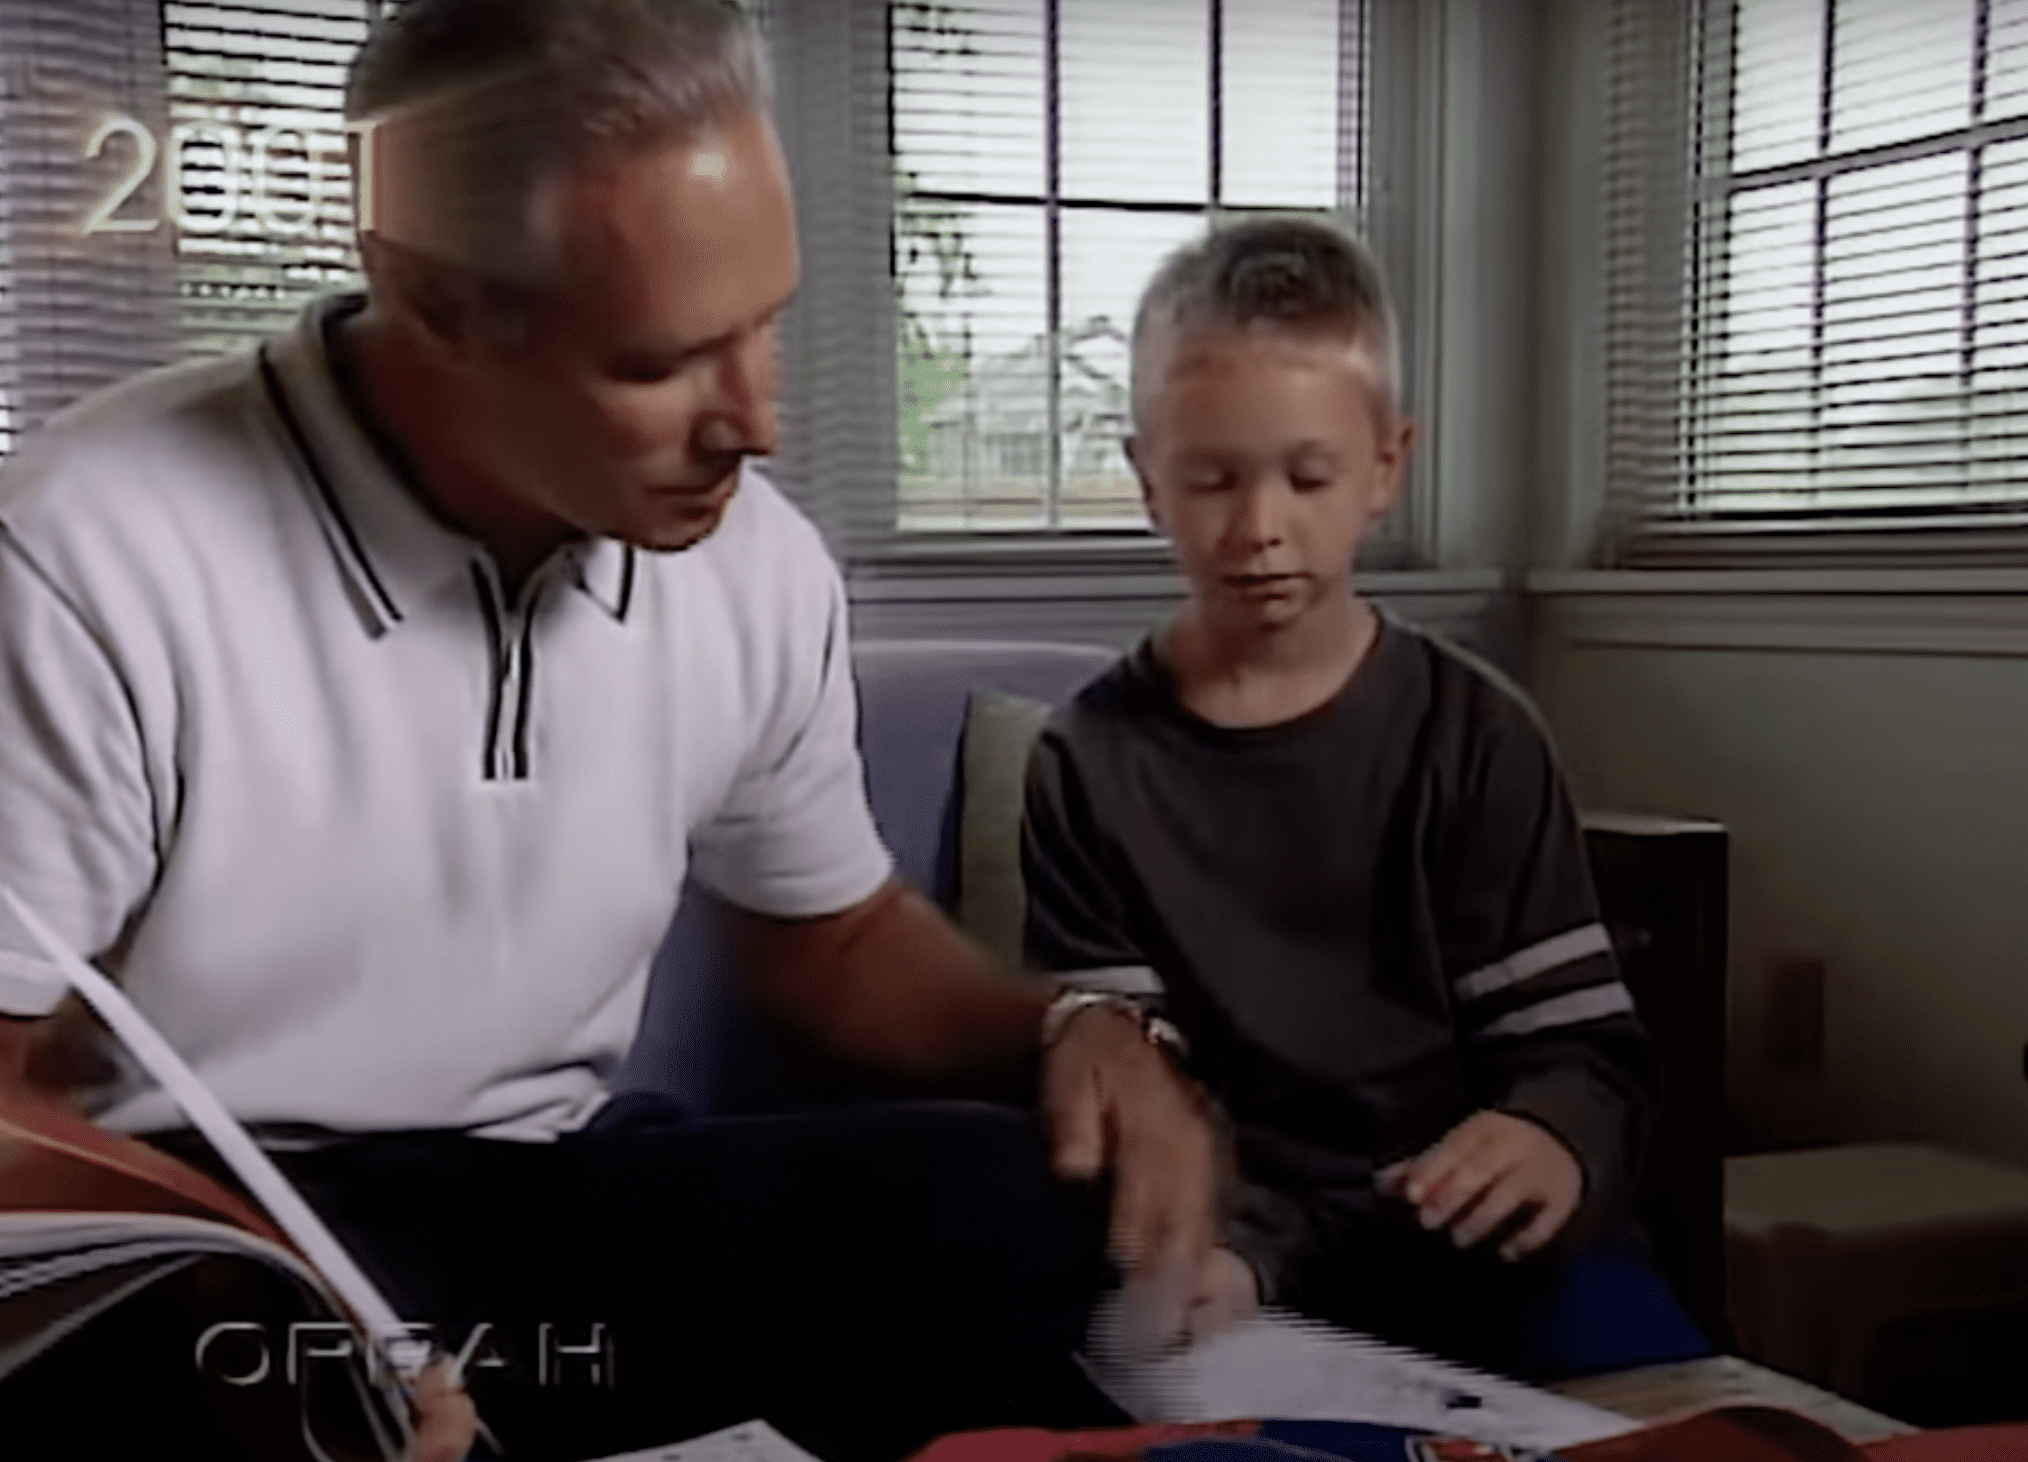 Ben helps Bryan with his school work. | Source: YouTube.com/OWN